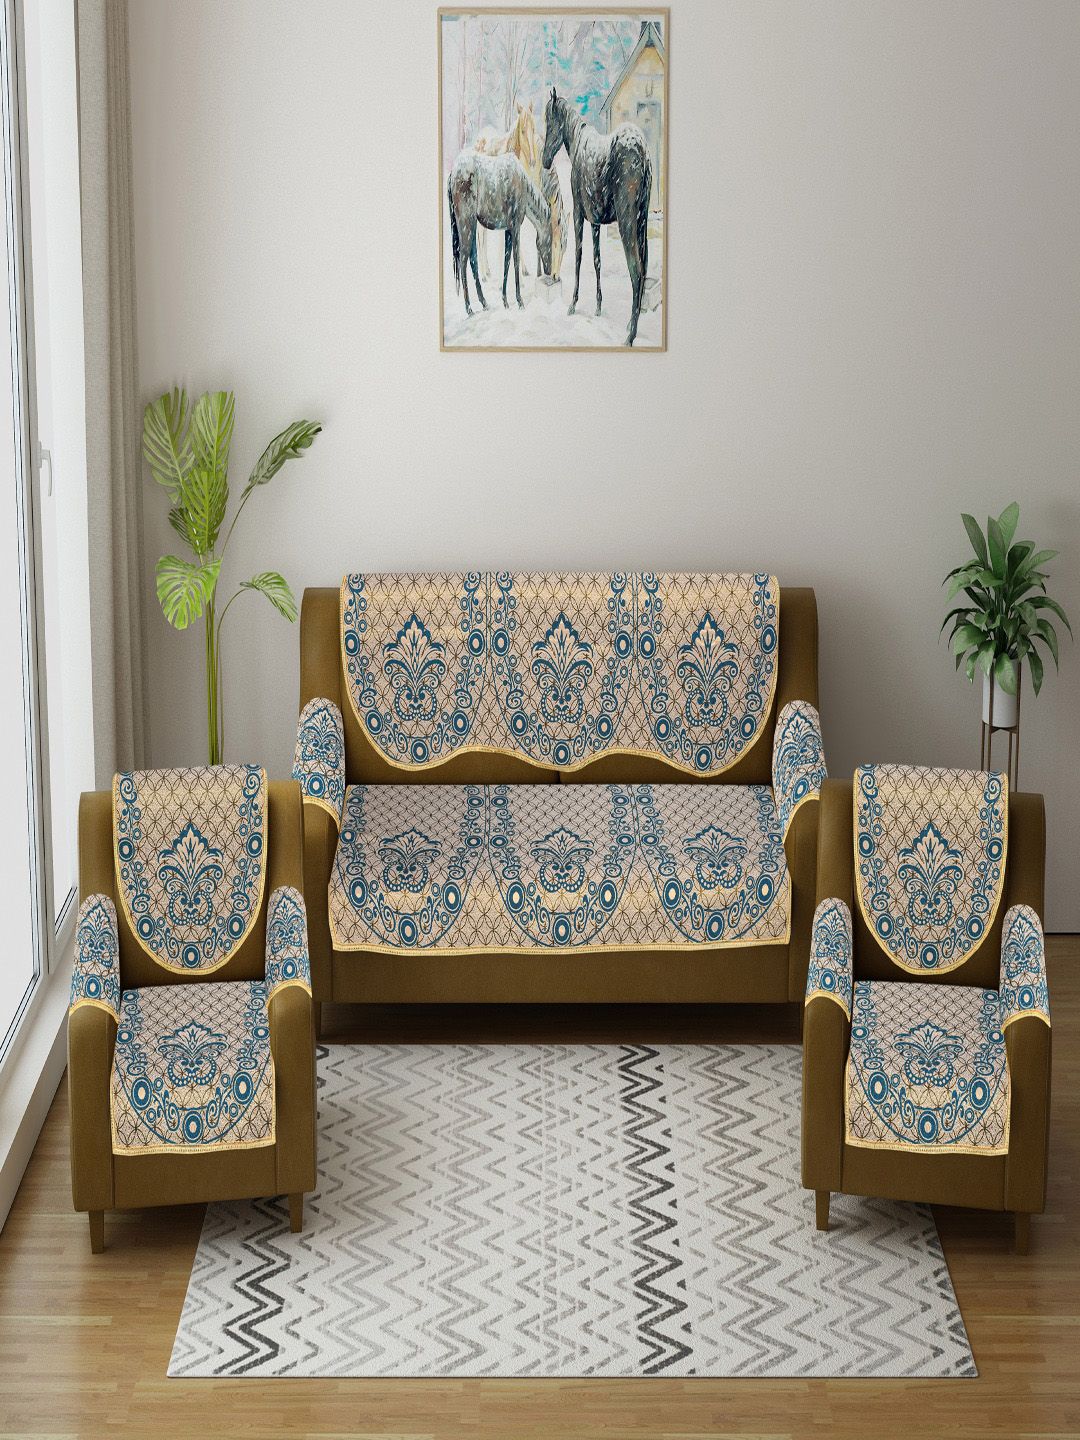 MULTITEX Blue & Cream-Colored Ethnic Motifs Printed Set of 16-Pieces Sofa Covers Price in India